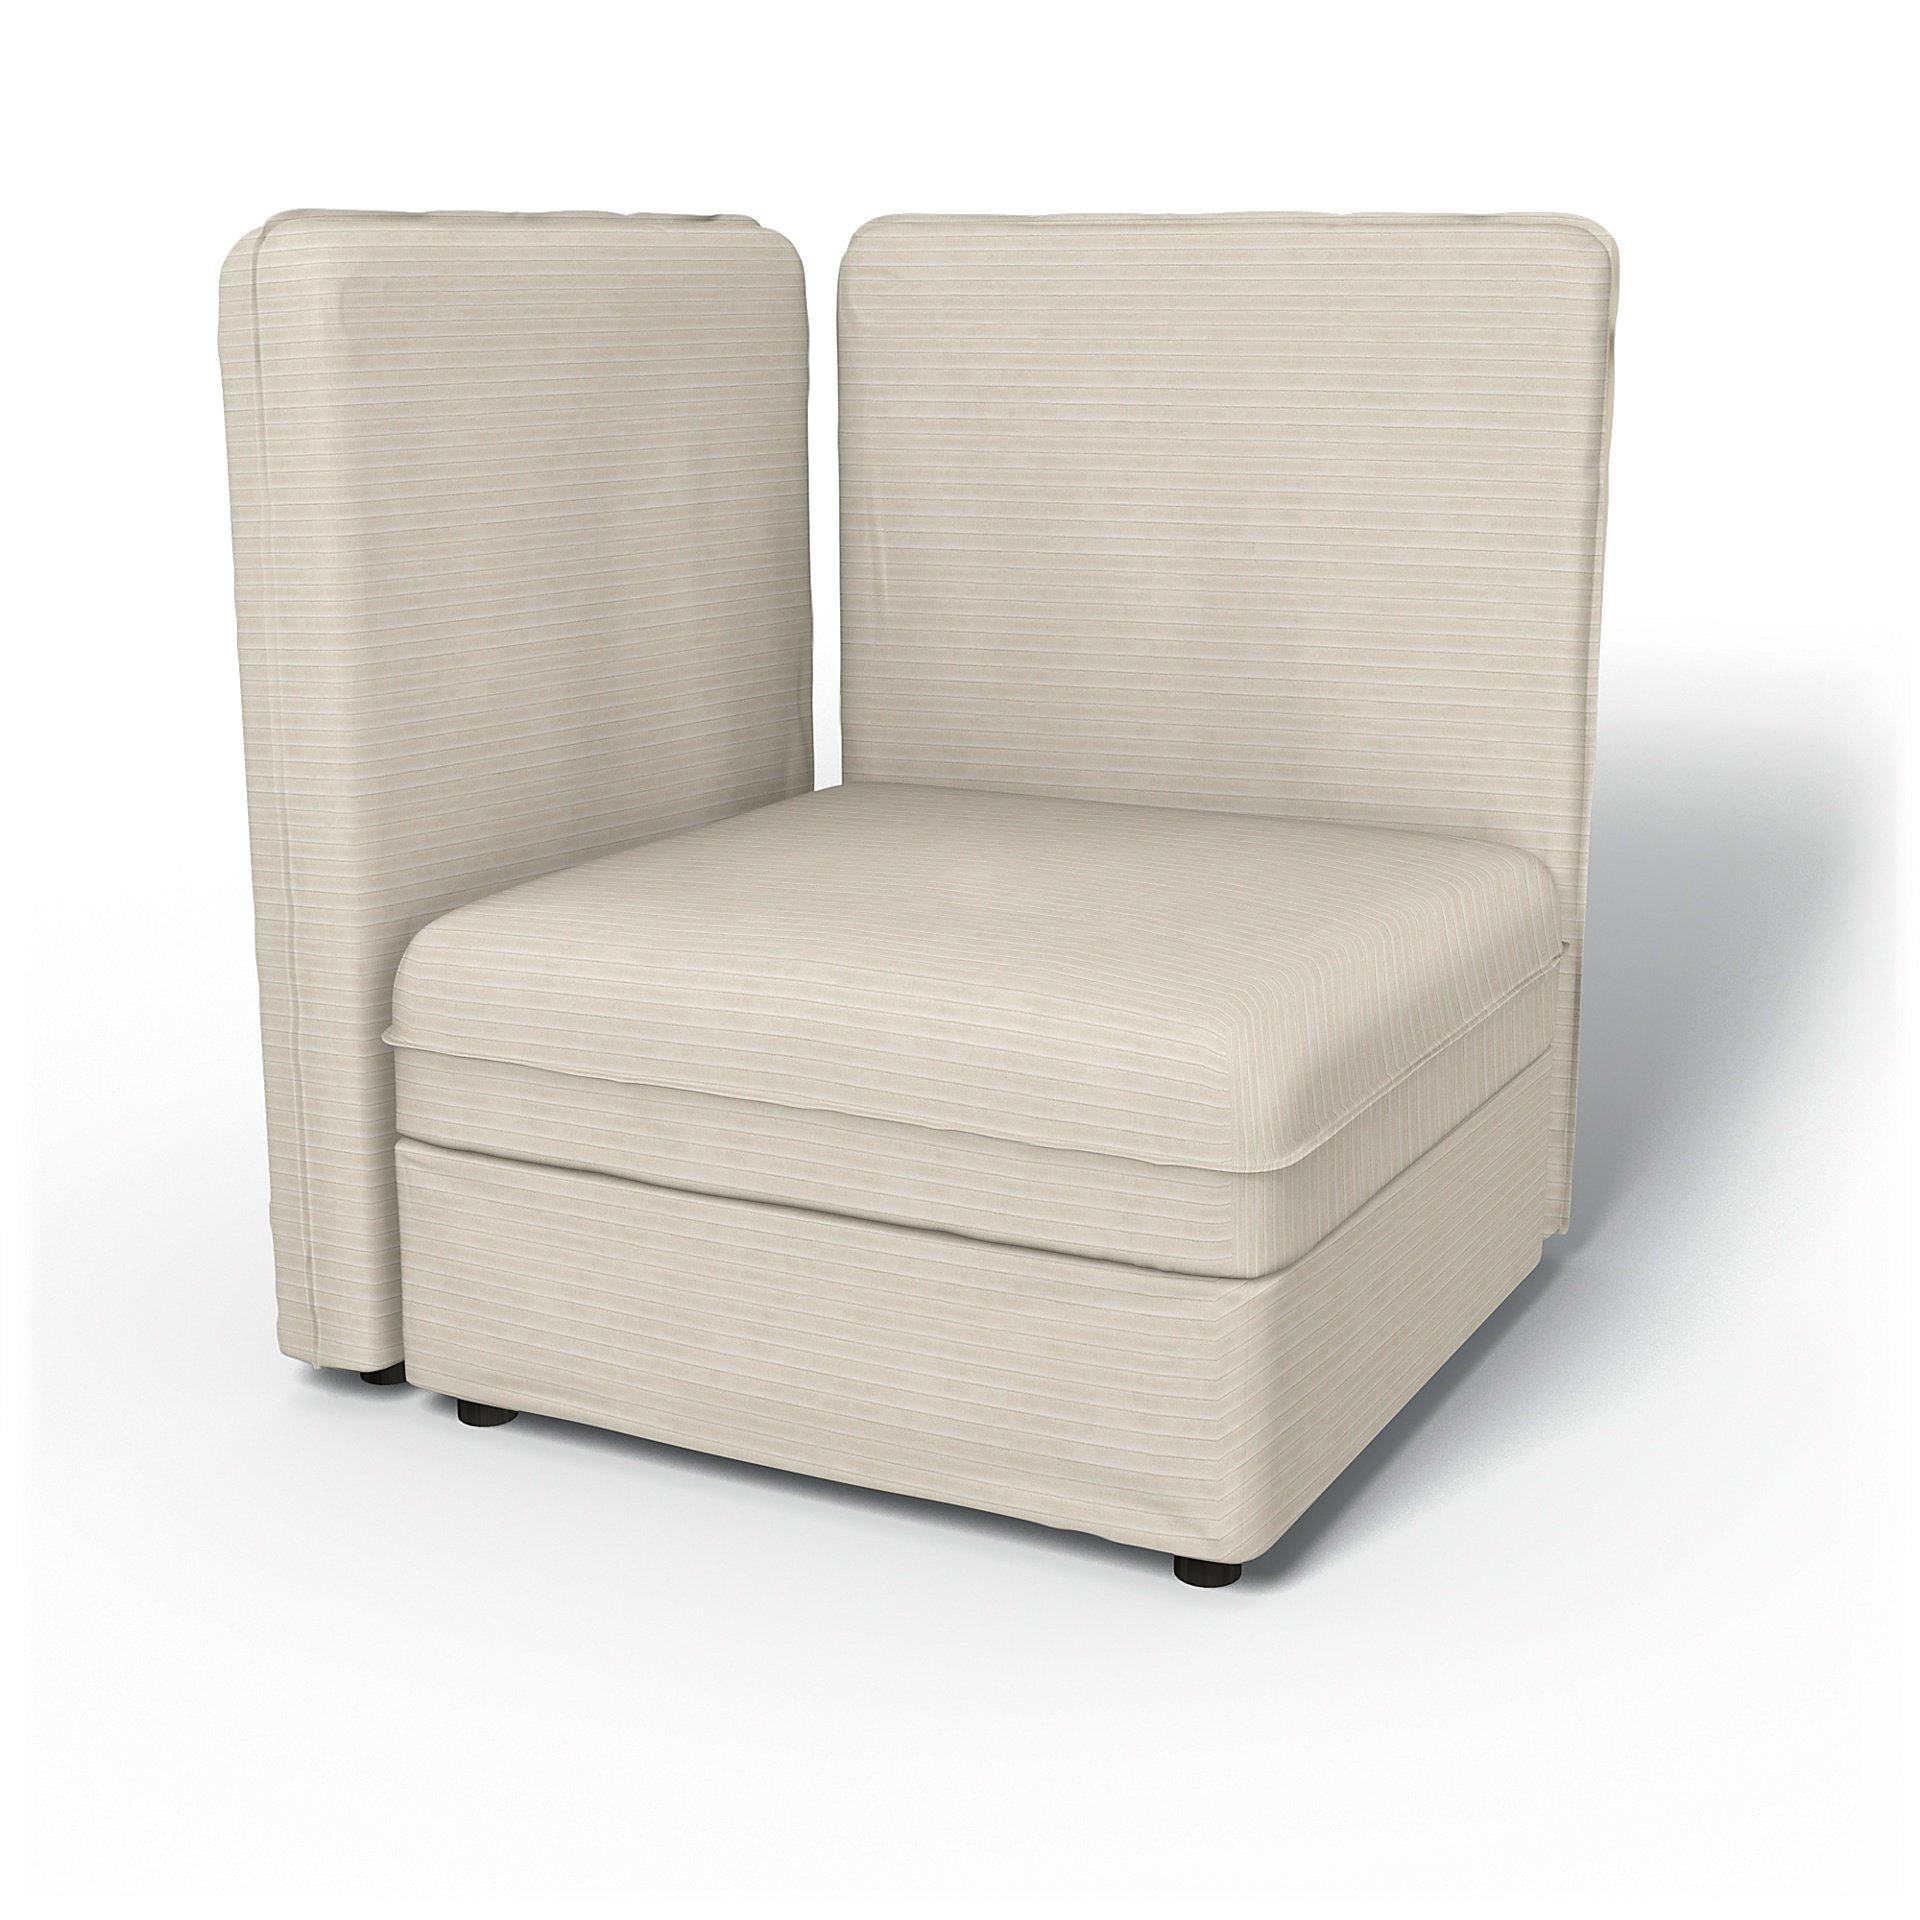 IKEA - Vallentuna Corner Seat Module with High Back and Storage Cover 80x80 32x32in, Tofu, Corduroy 